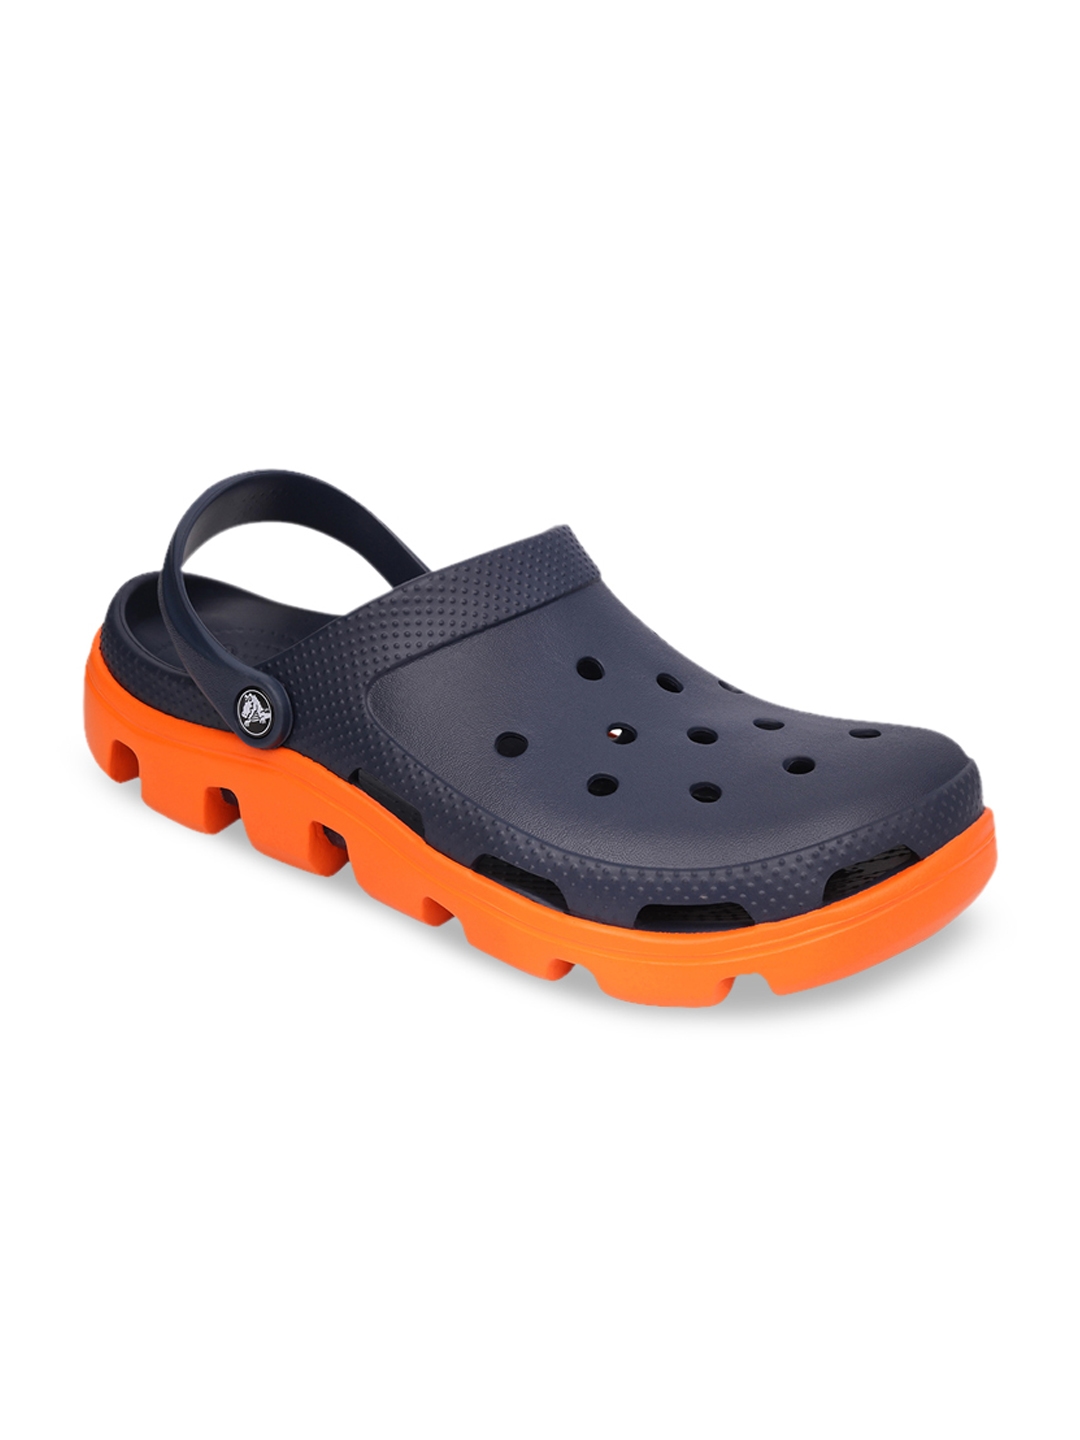 crocs orange and grey